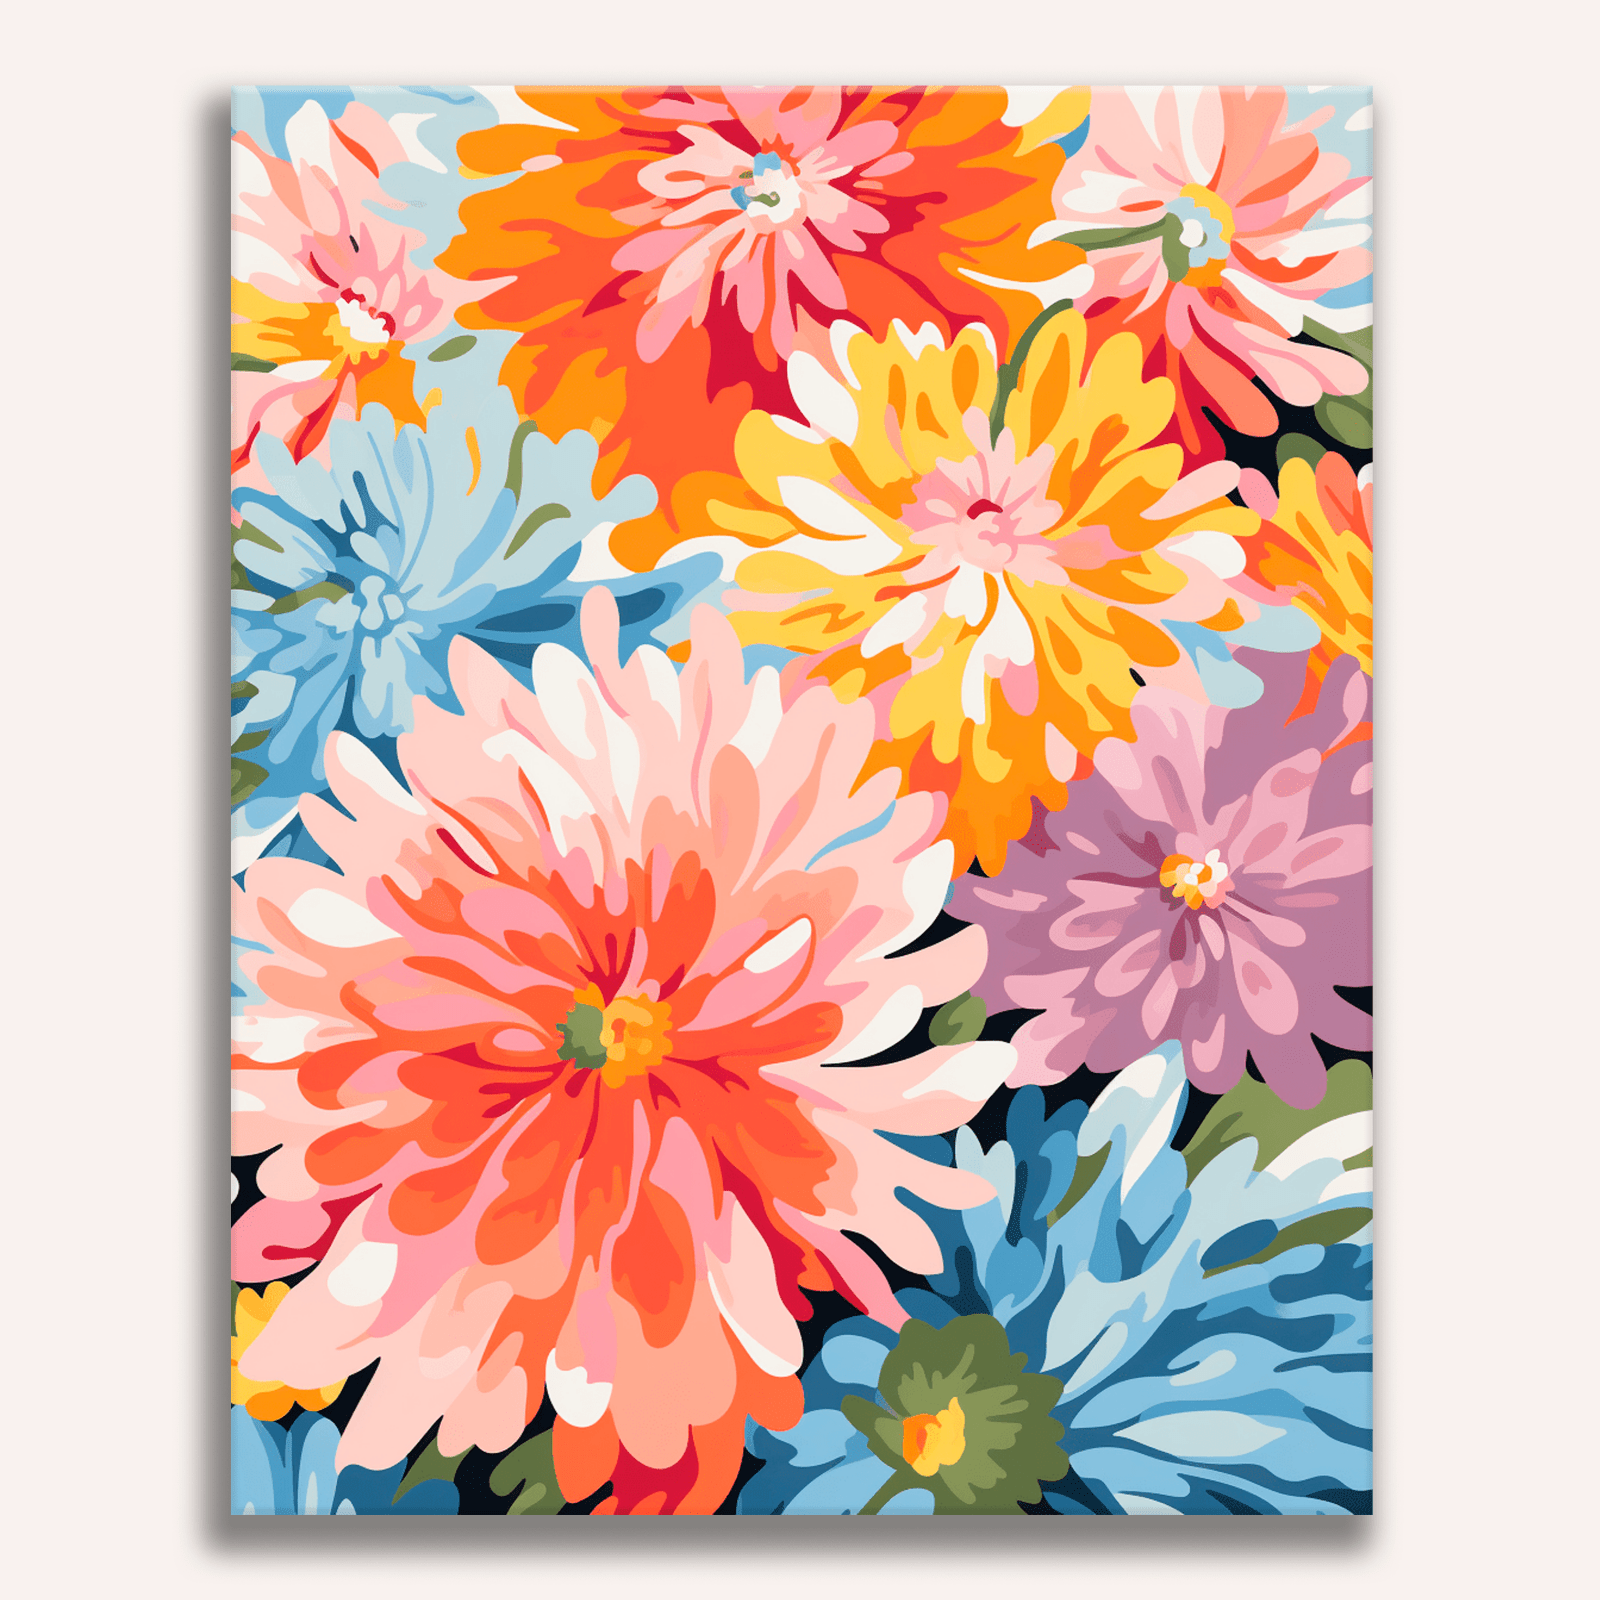 Sensational Bloom - Number Artist Paint by Numbers Kits